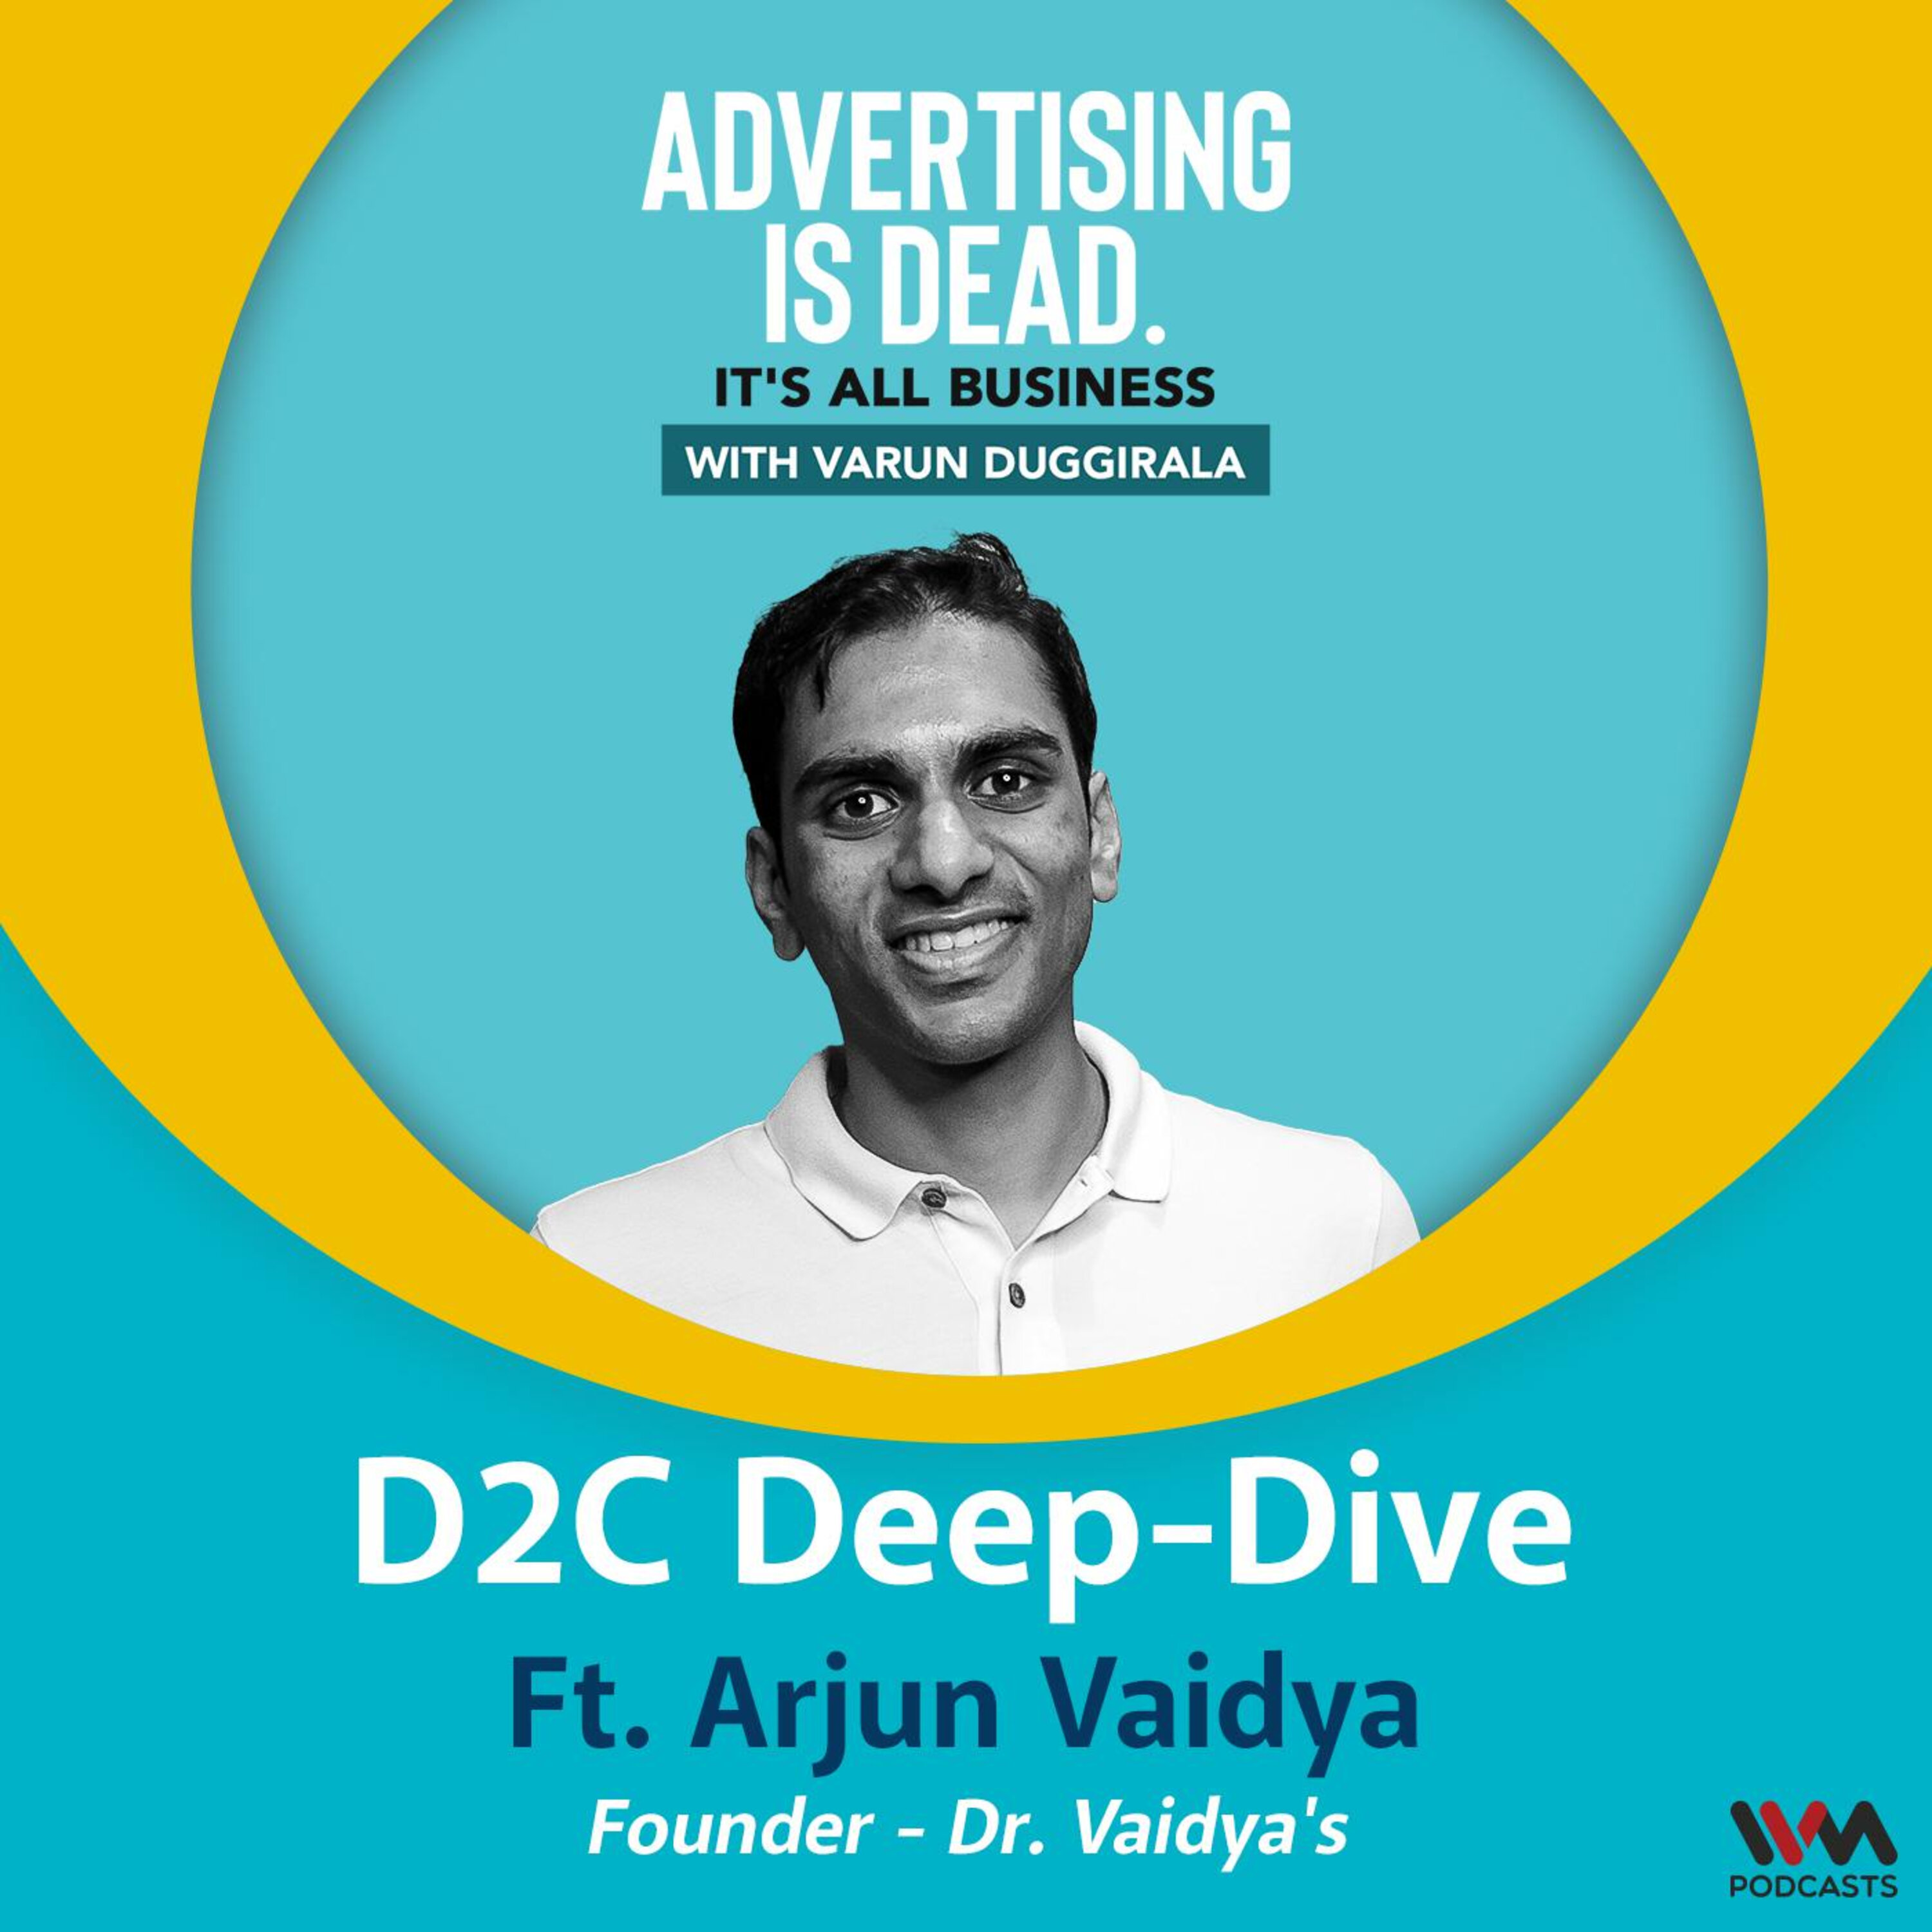 D2C Deep-Dive ft. Arjun Vaidya, Founder - Dr. Vaidya's